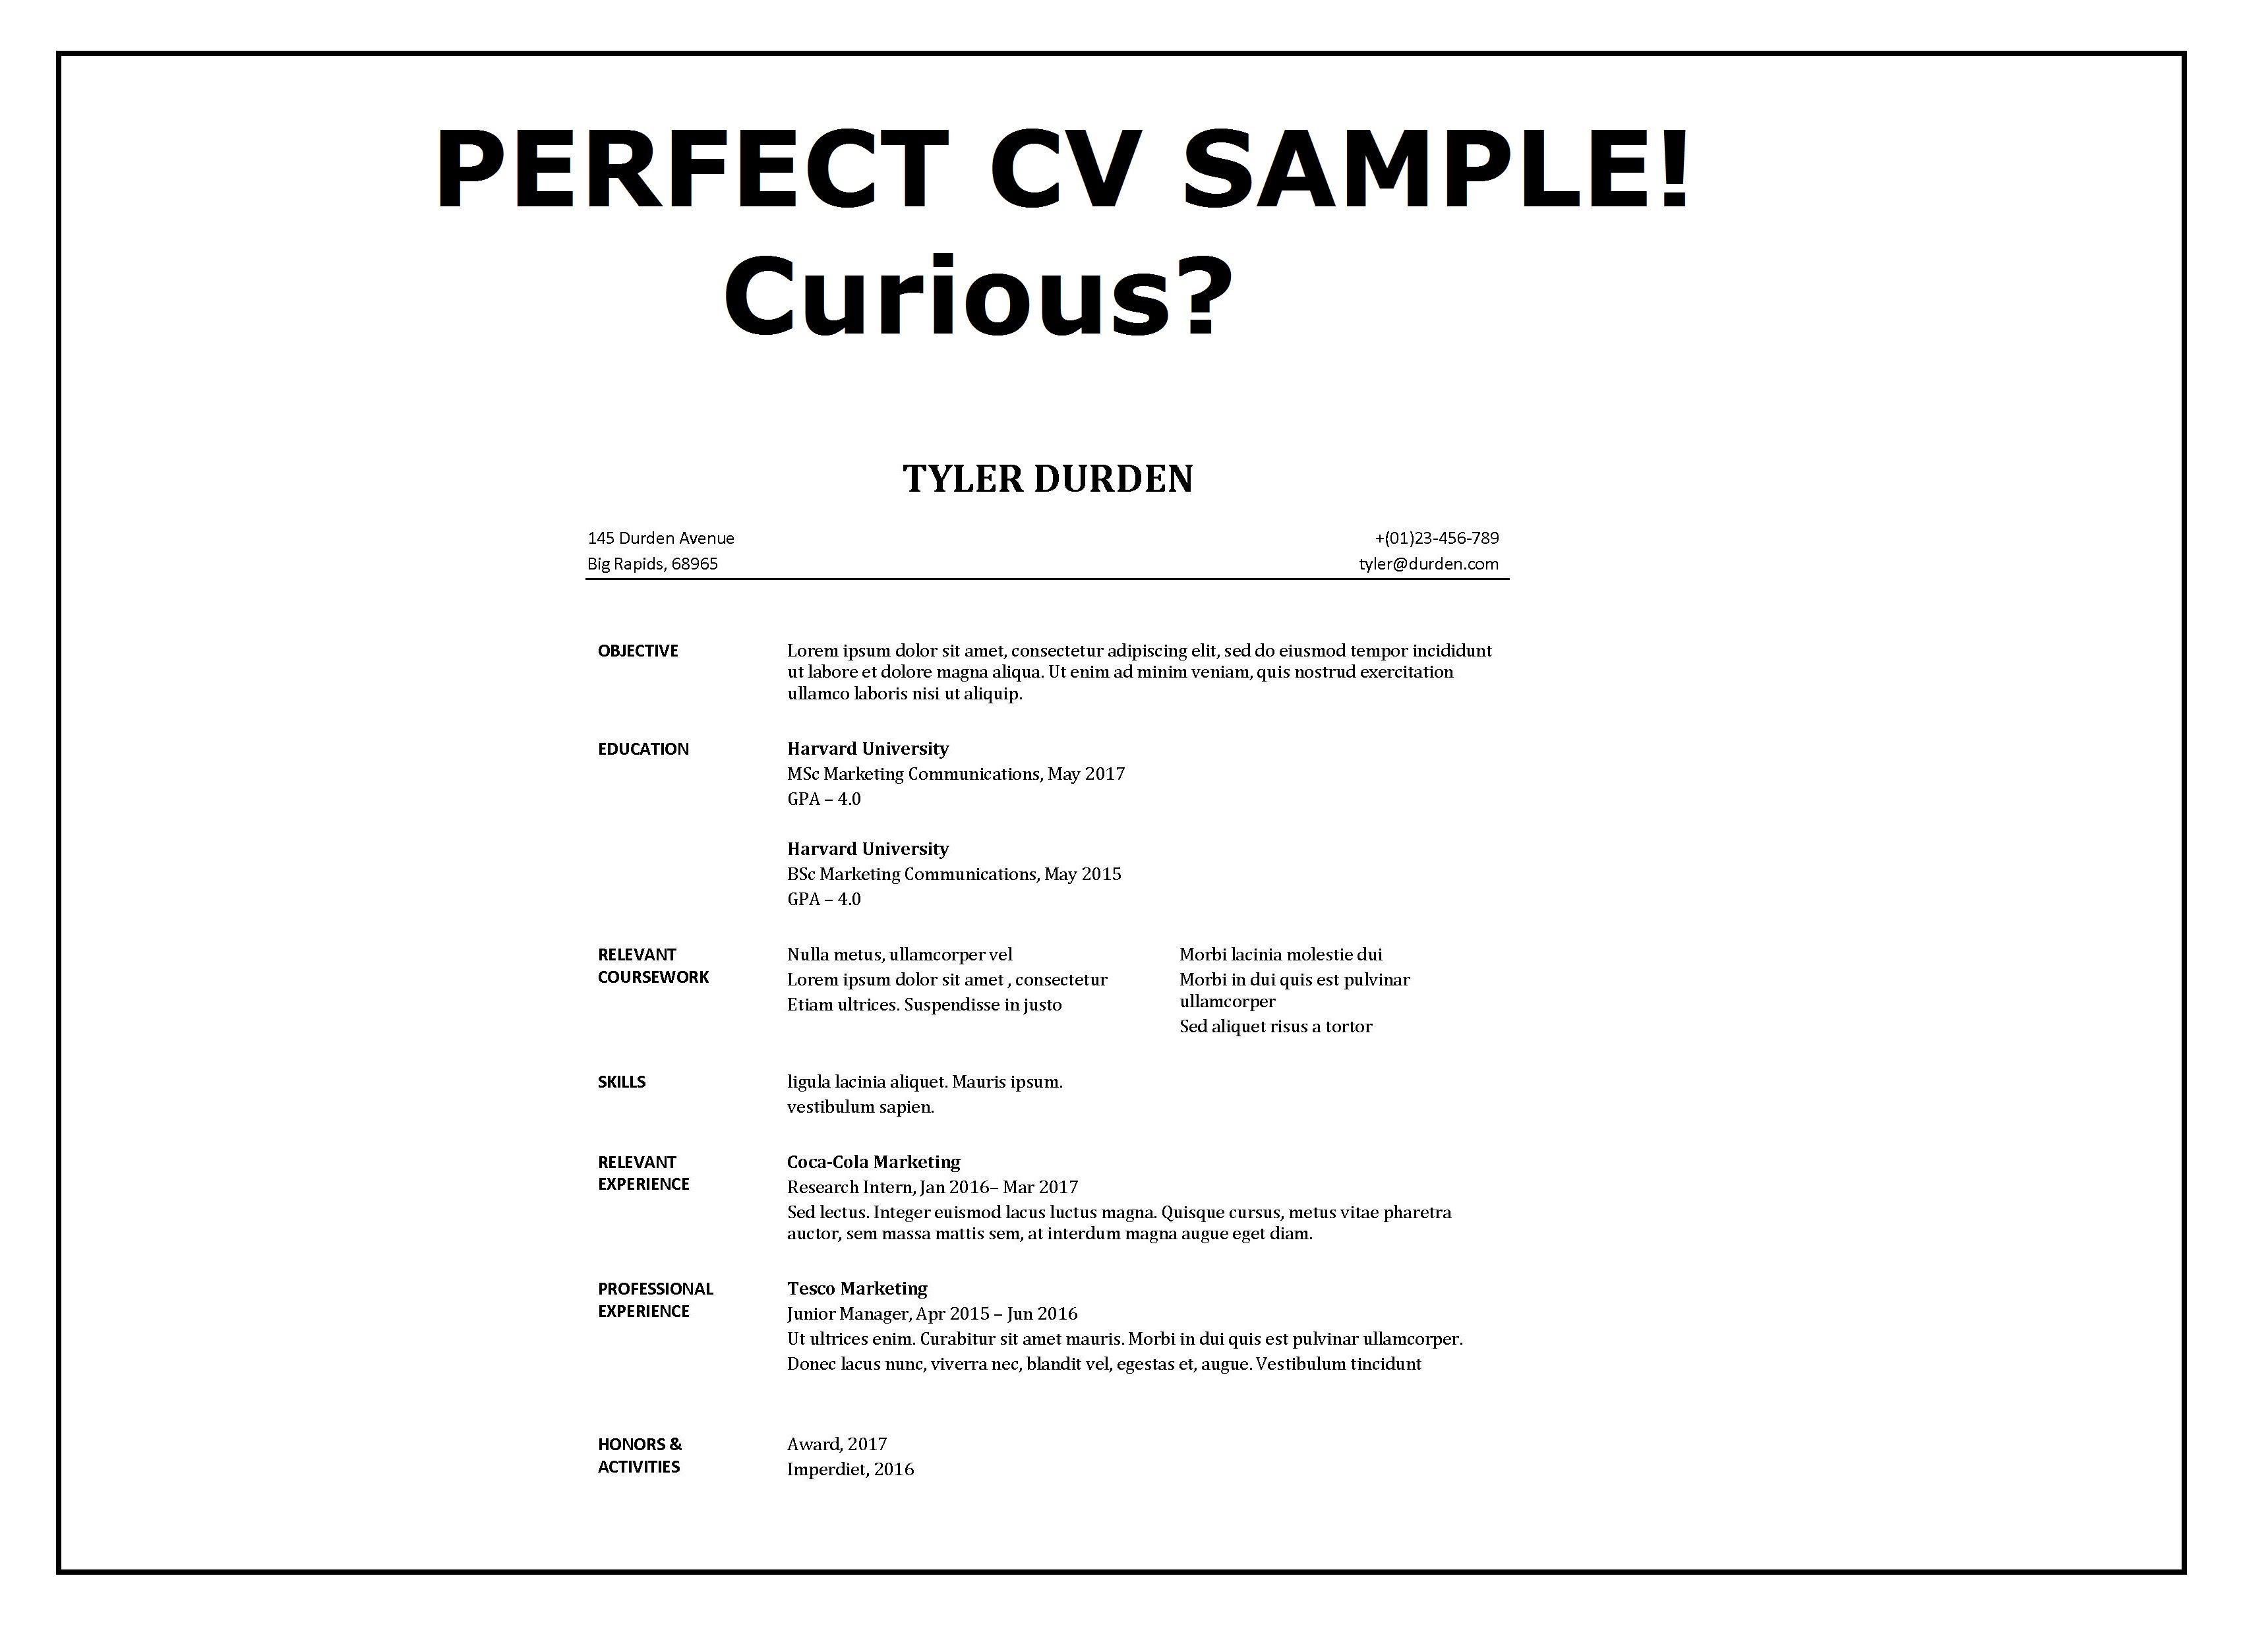 CV Sample main image